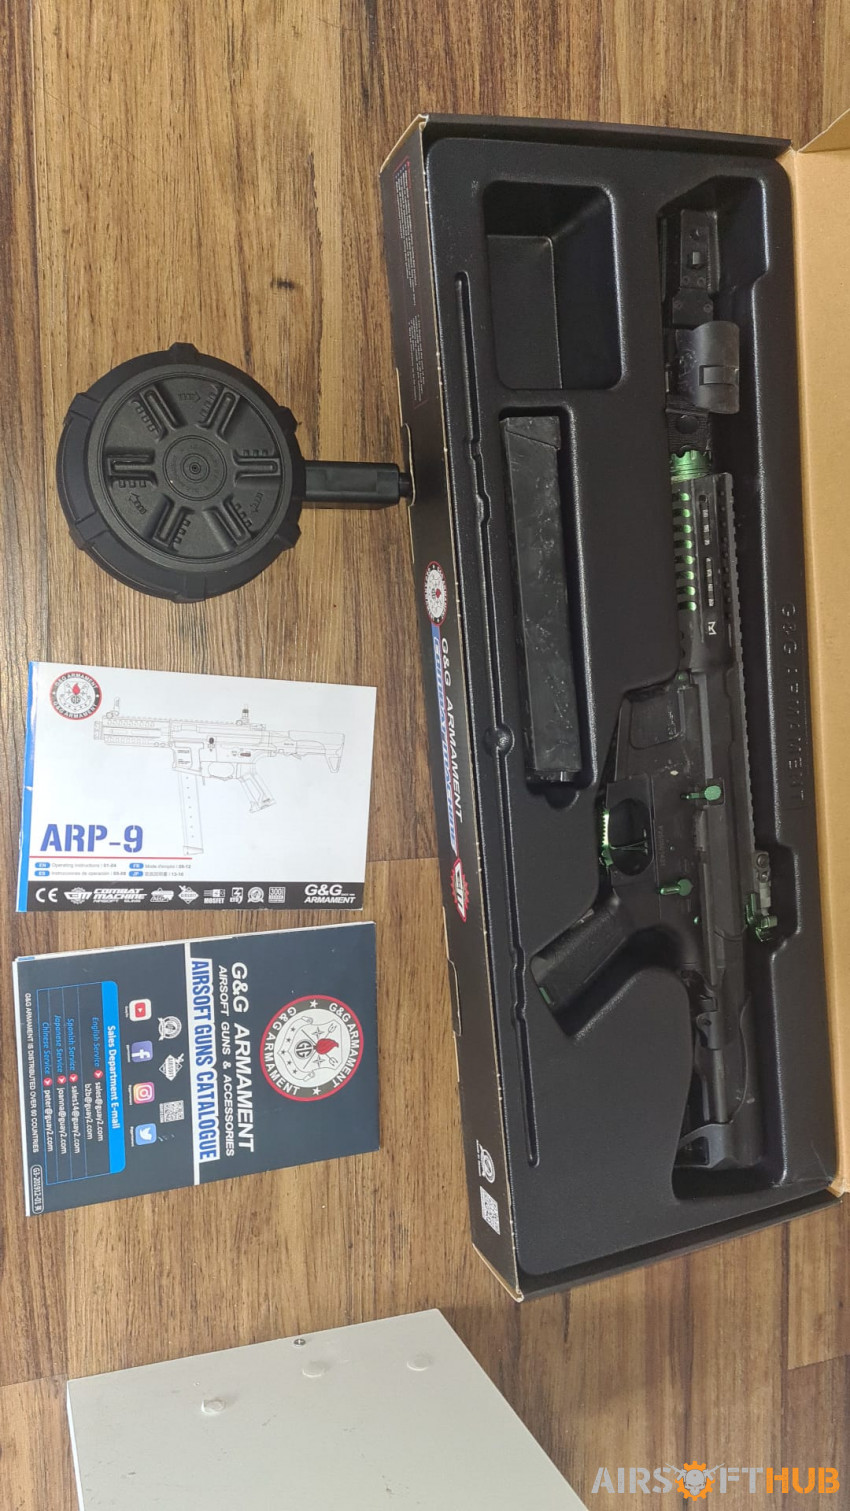 ARP9 G&G - Used airsoft equipment